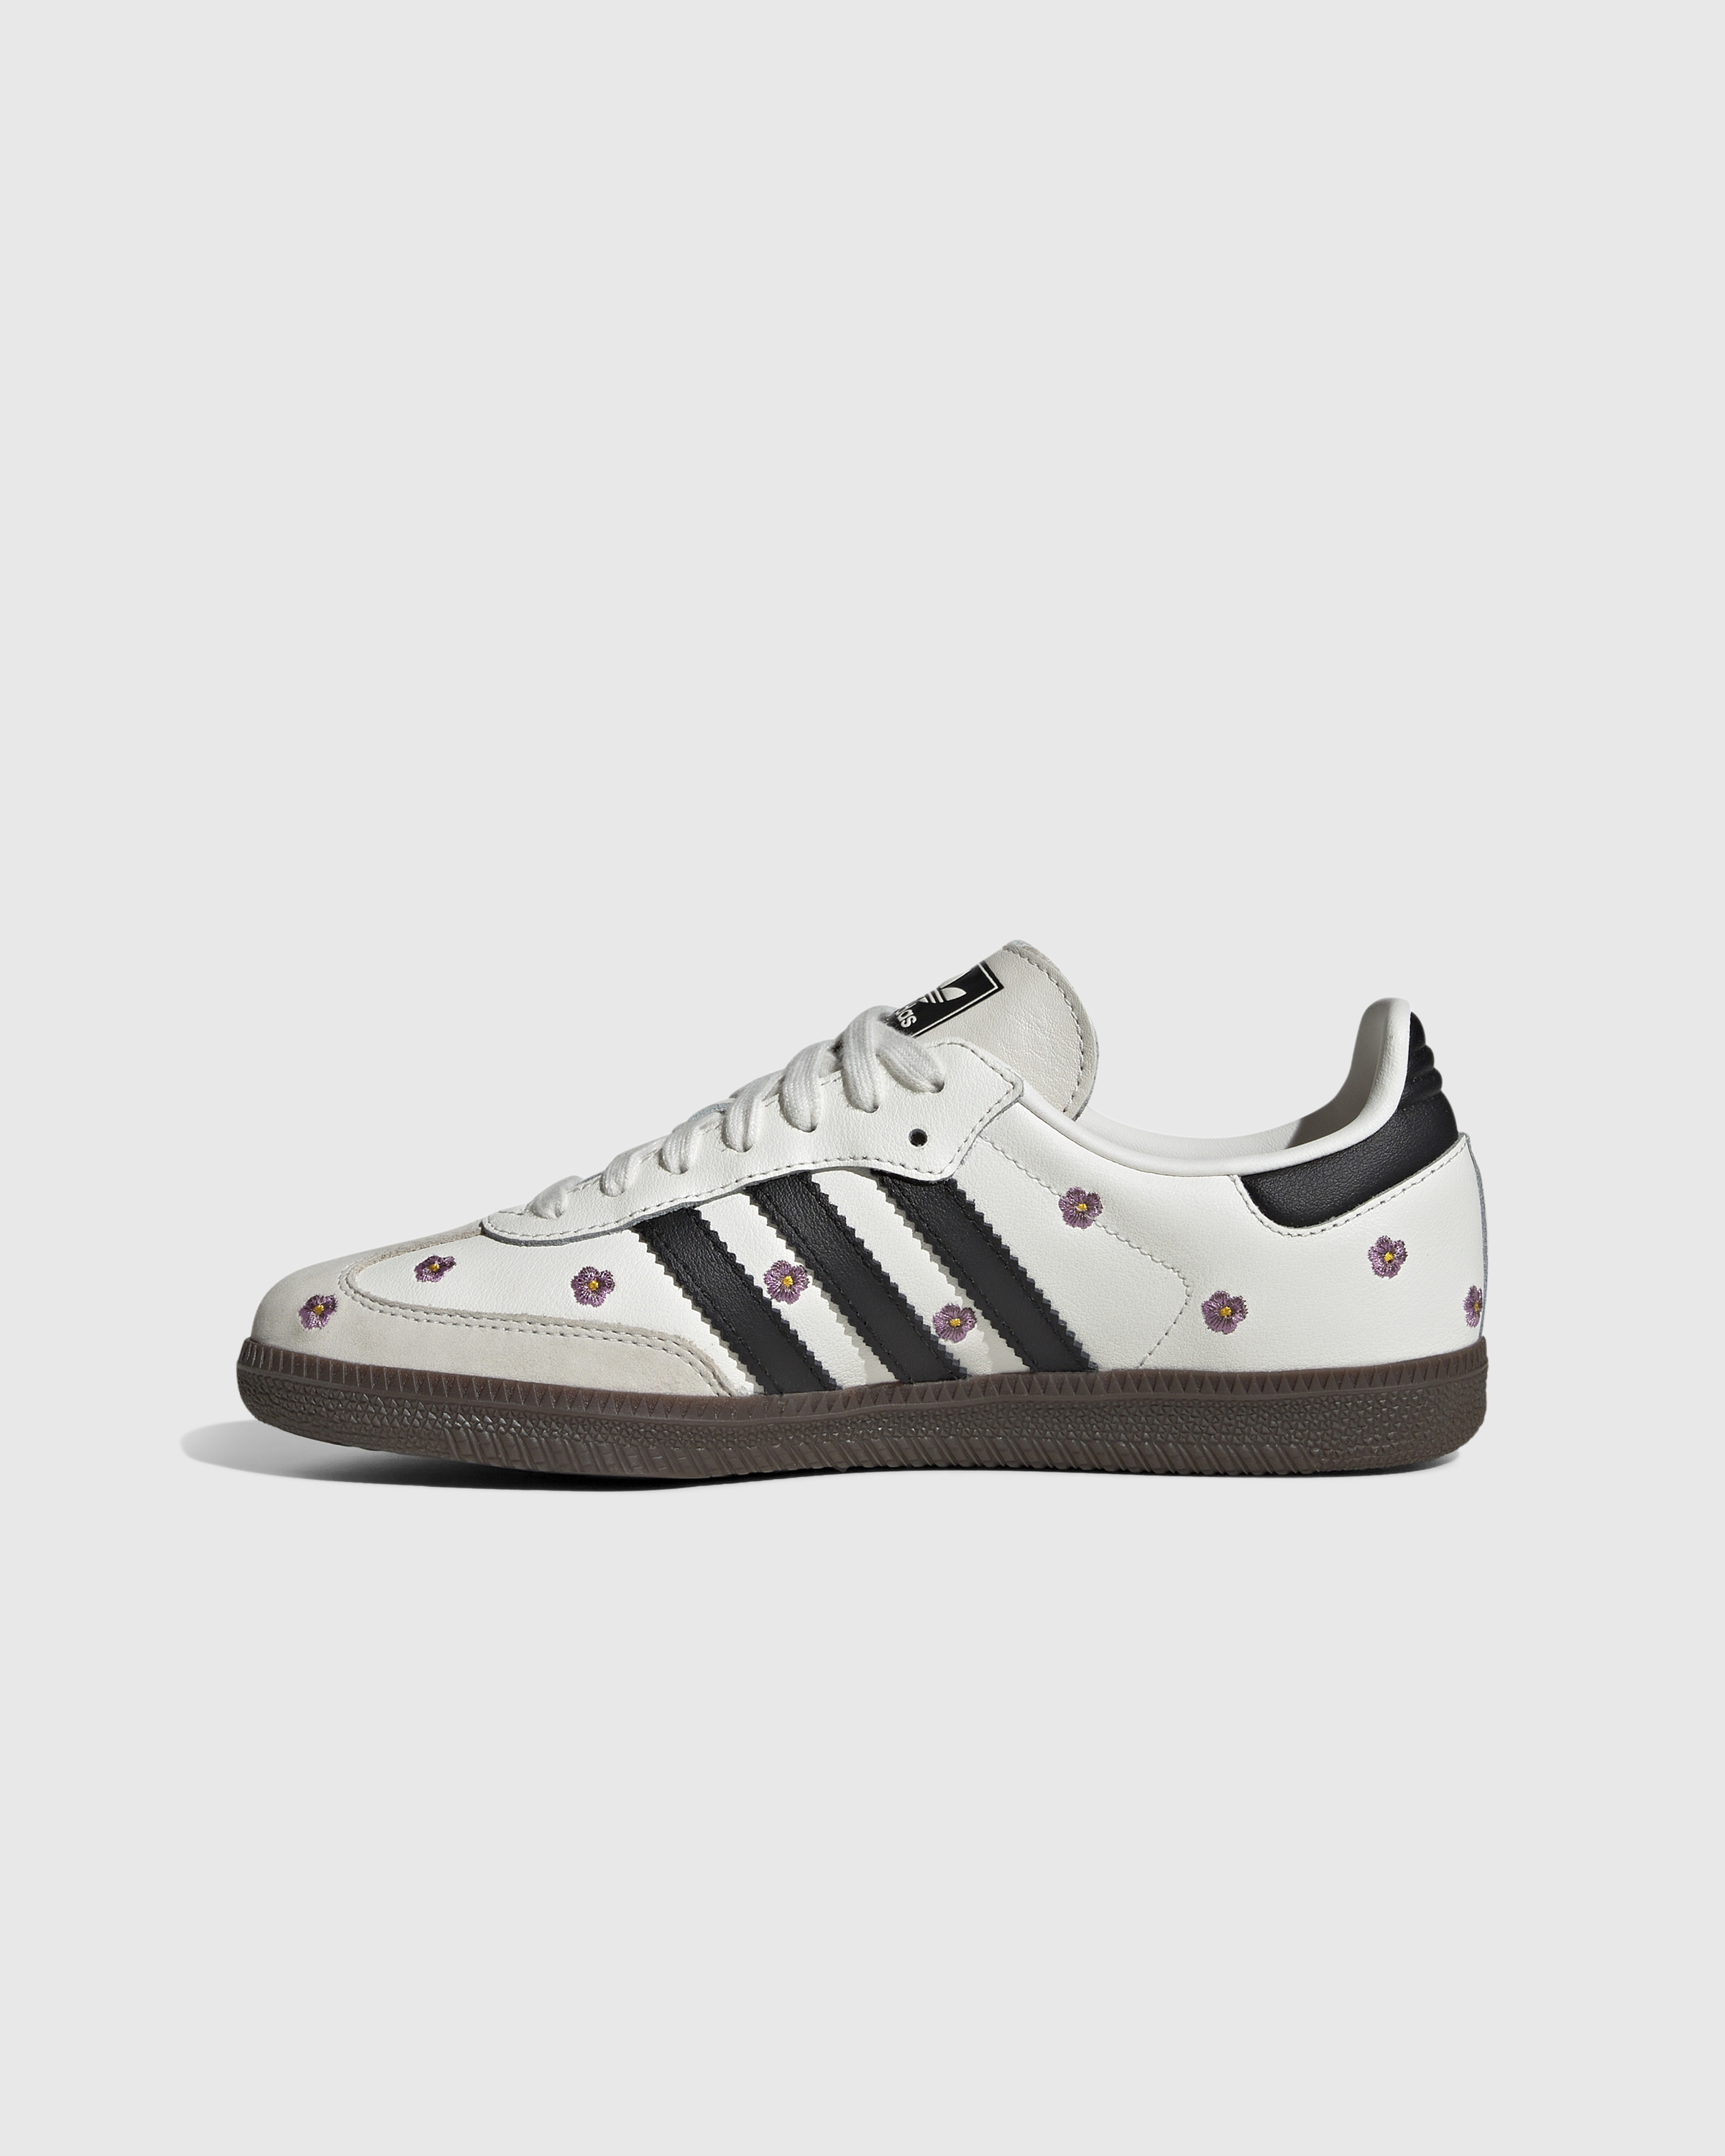 Adidas – Samba OG W White/Black/Gum - Low Top Sneakers - White - Image 2